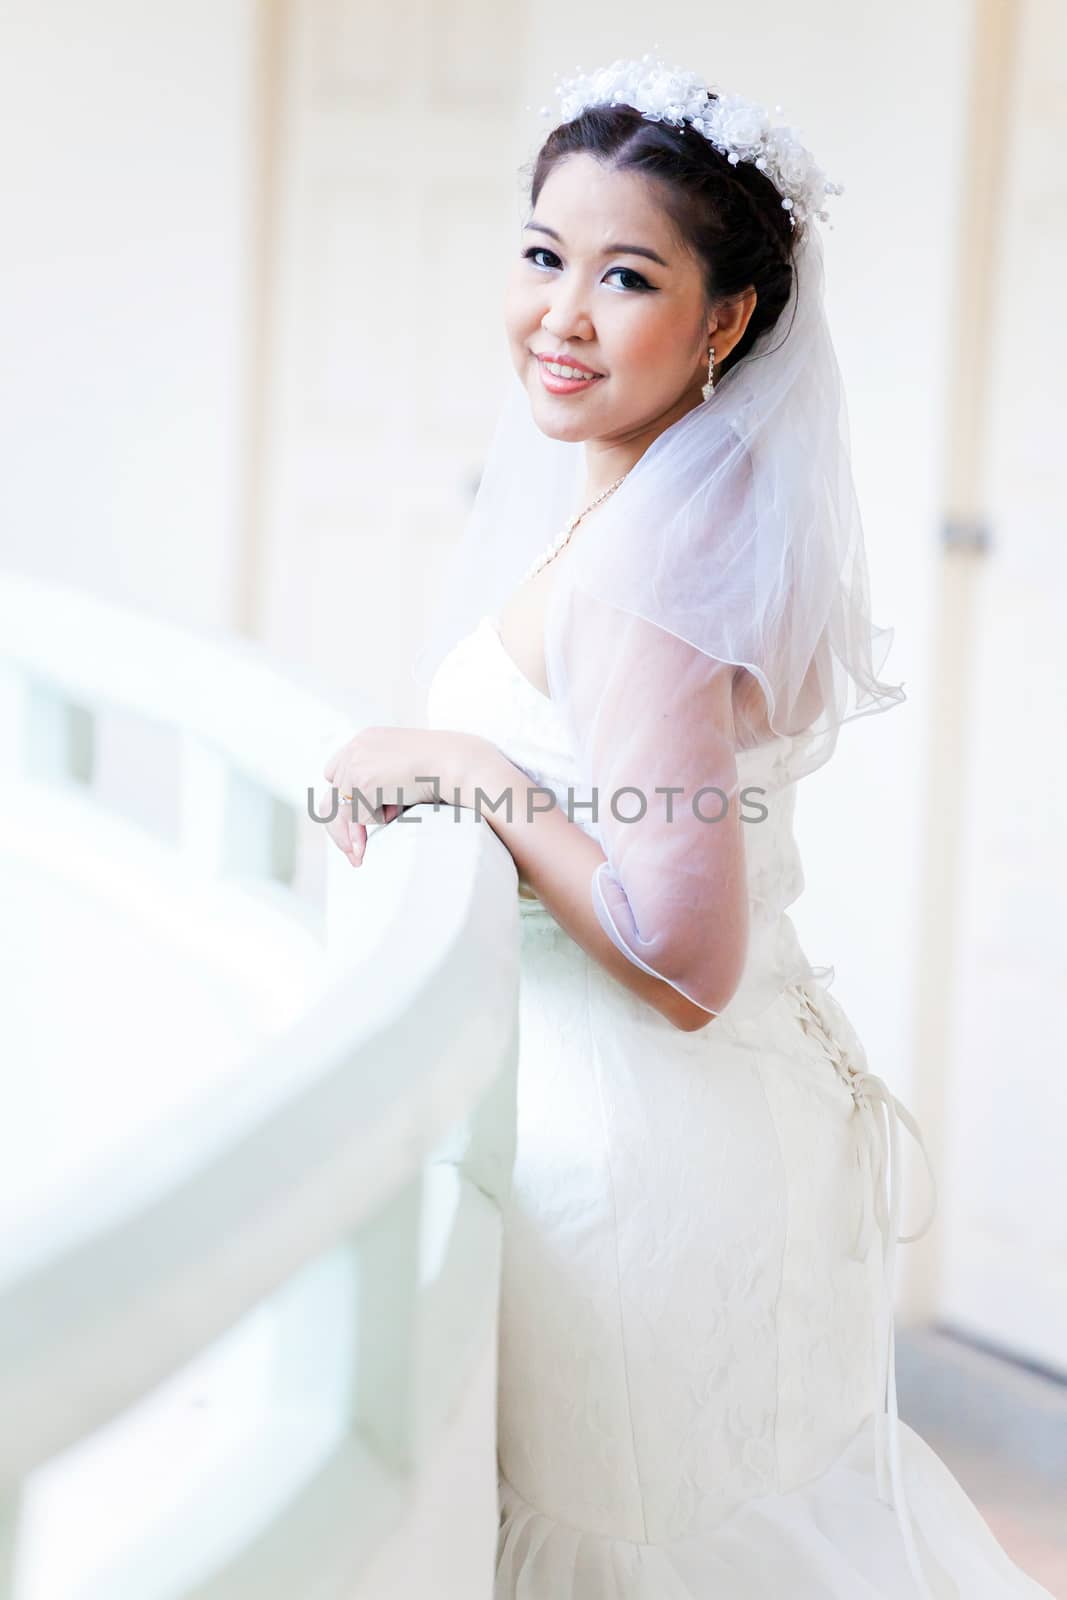 beautiful bride by vichie81